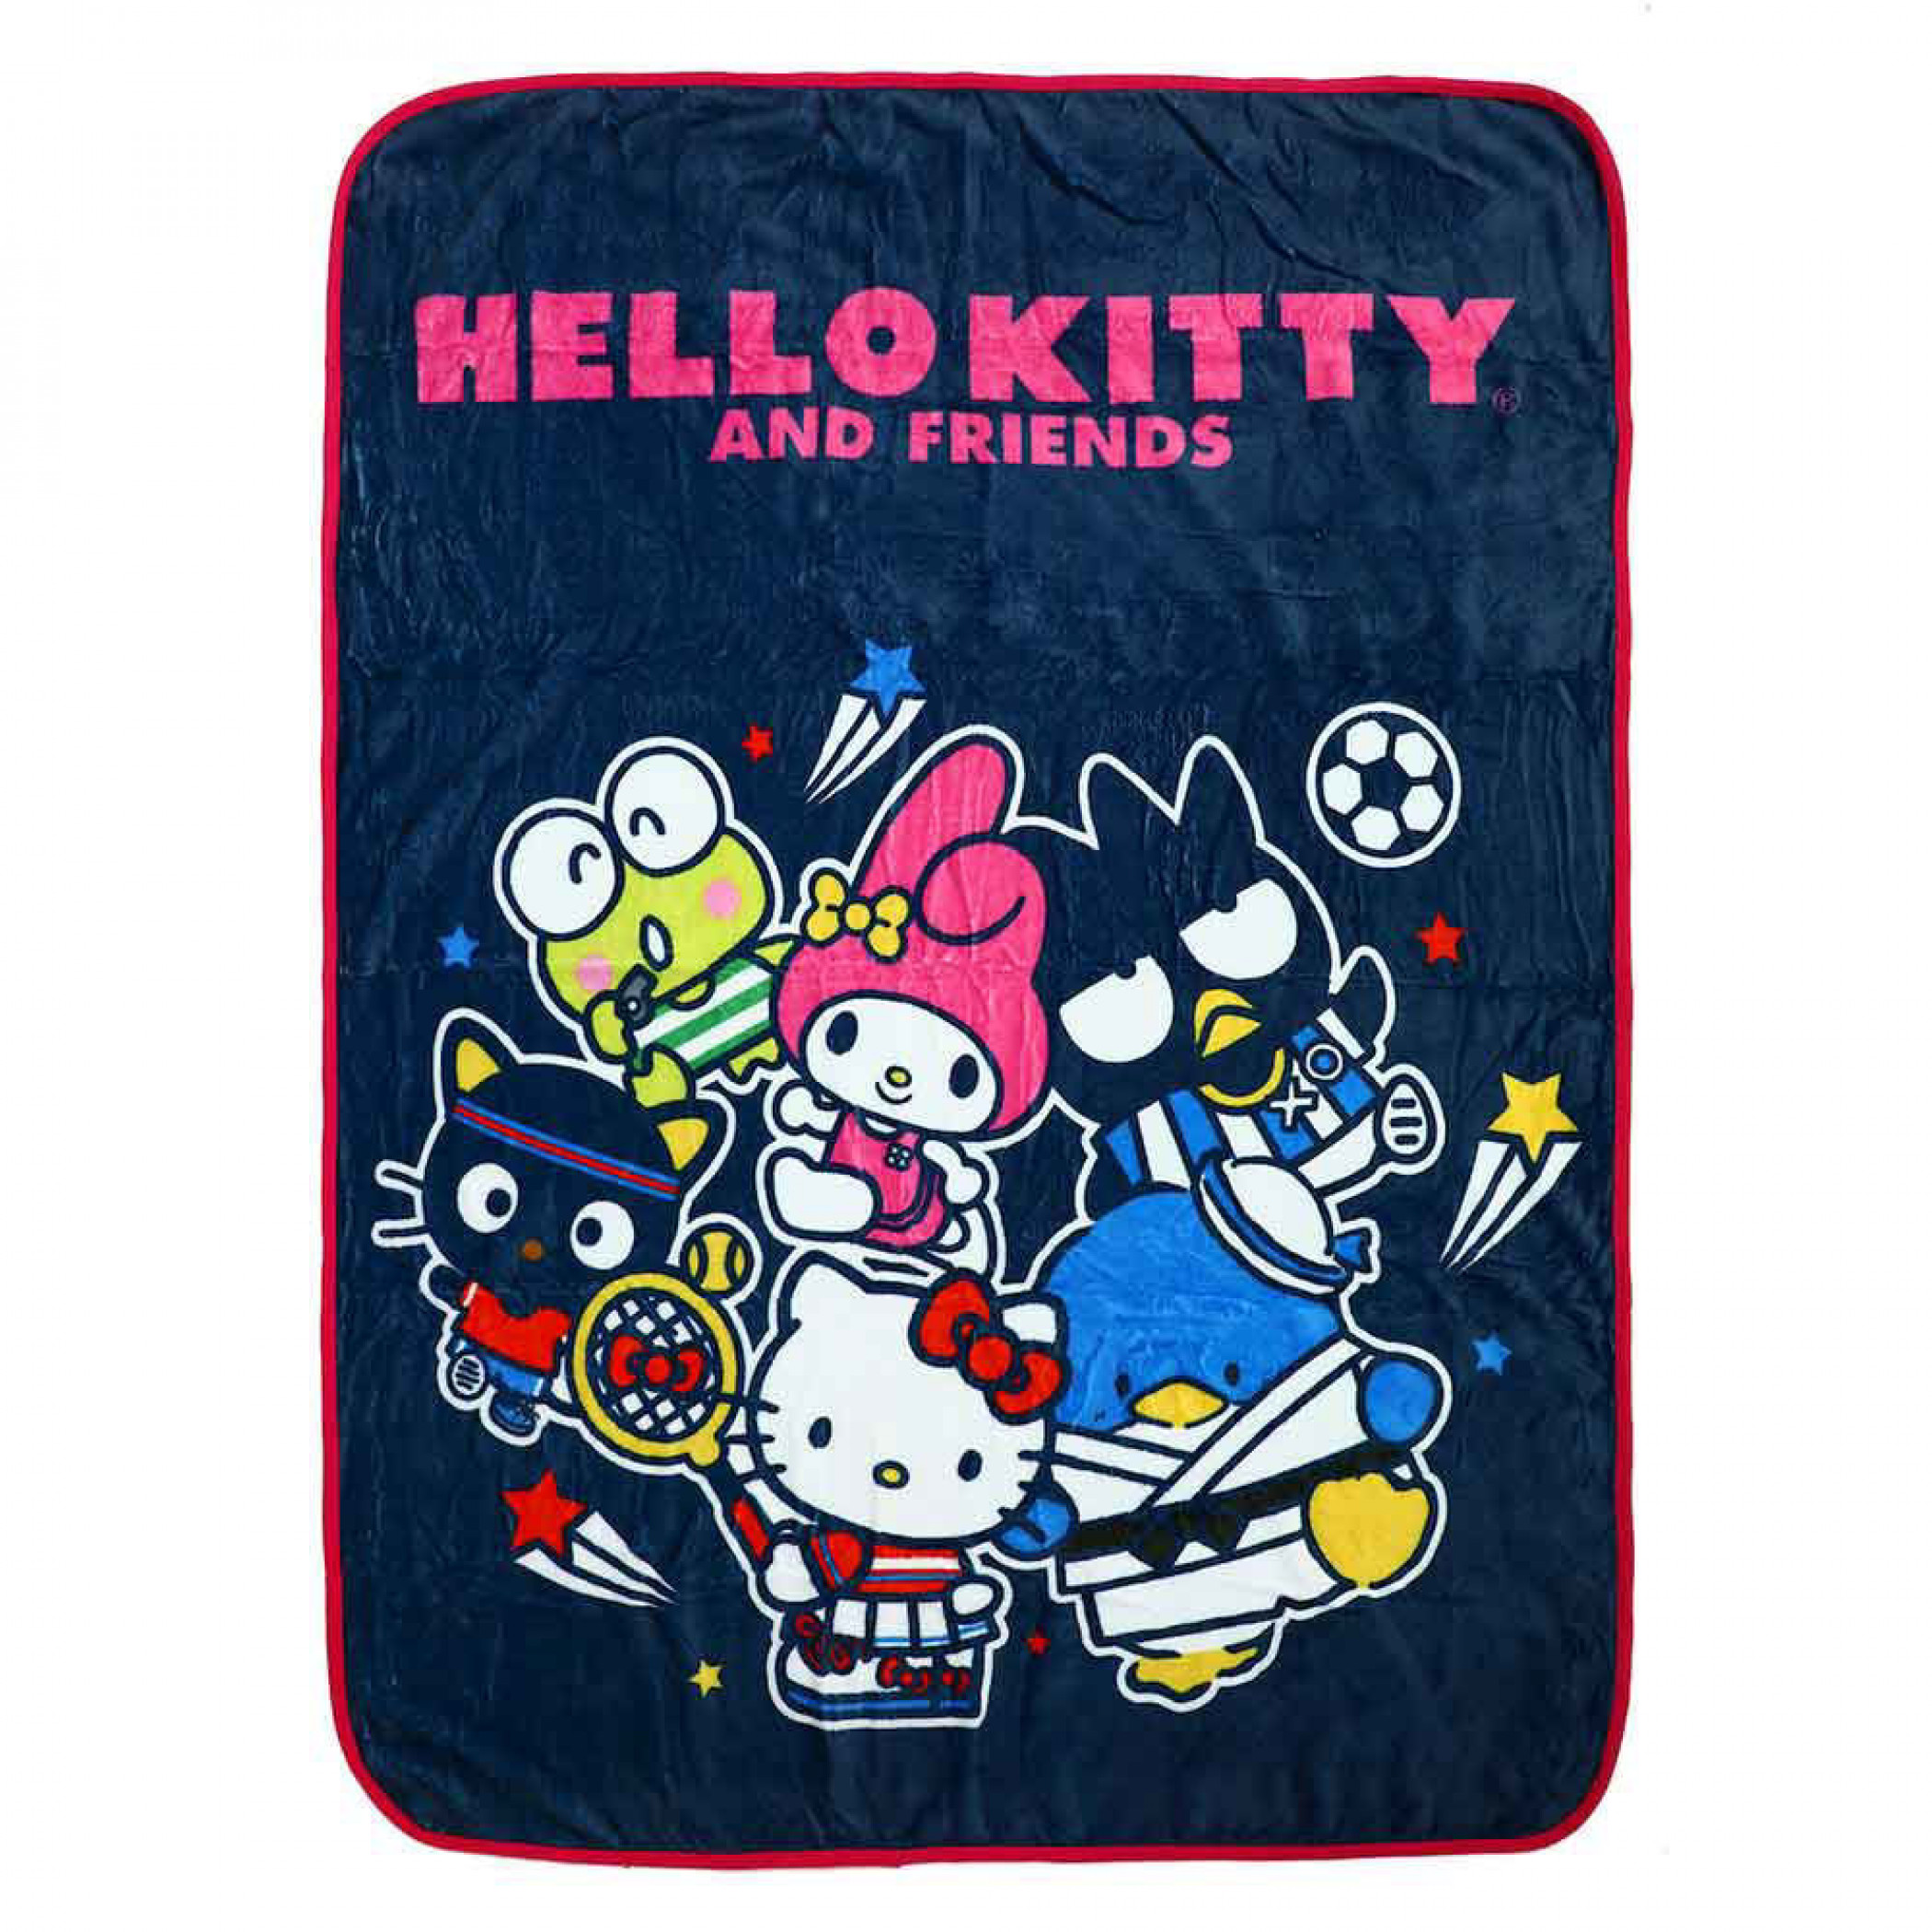 Sanrio Hello Kitty and Friends Throw Blanket